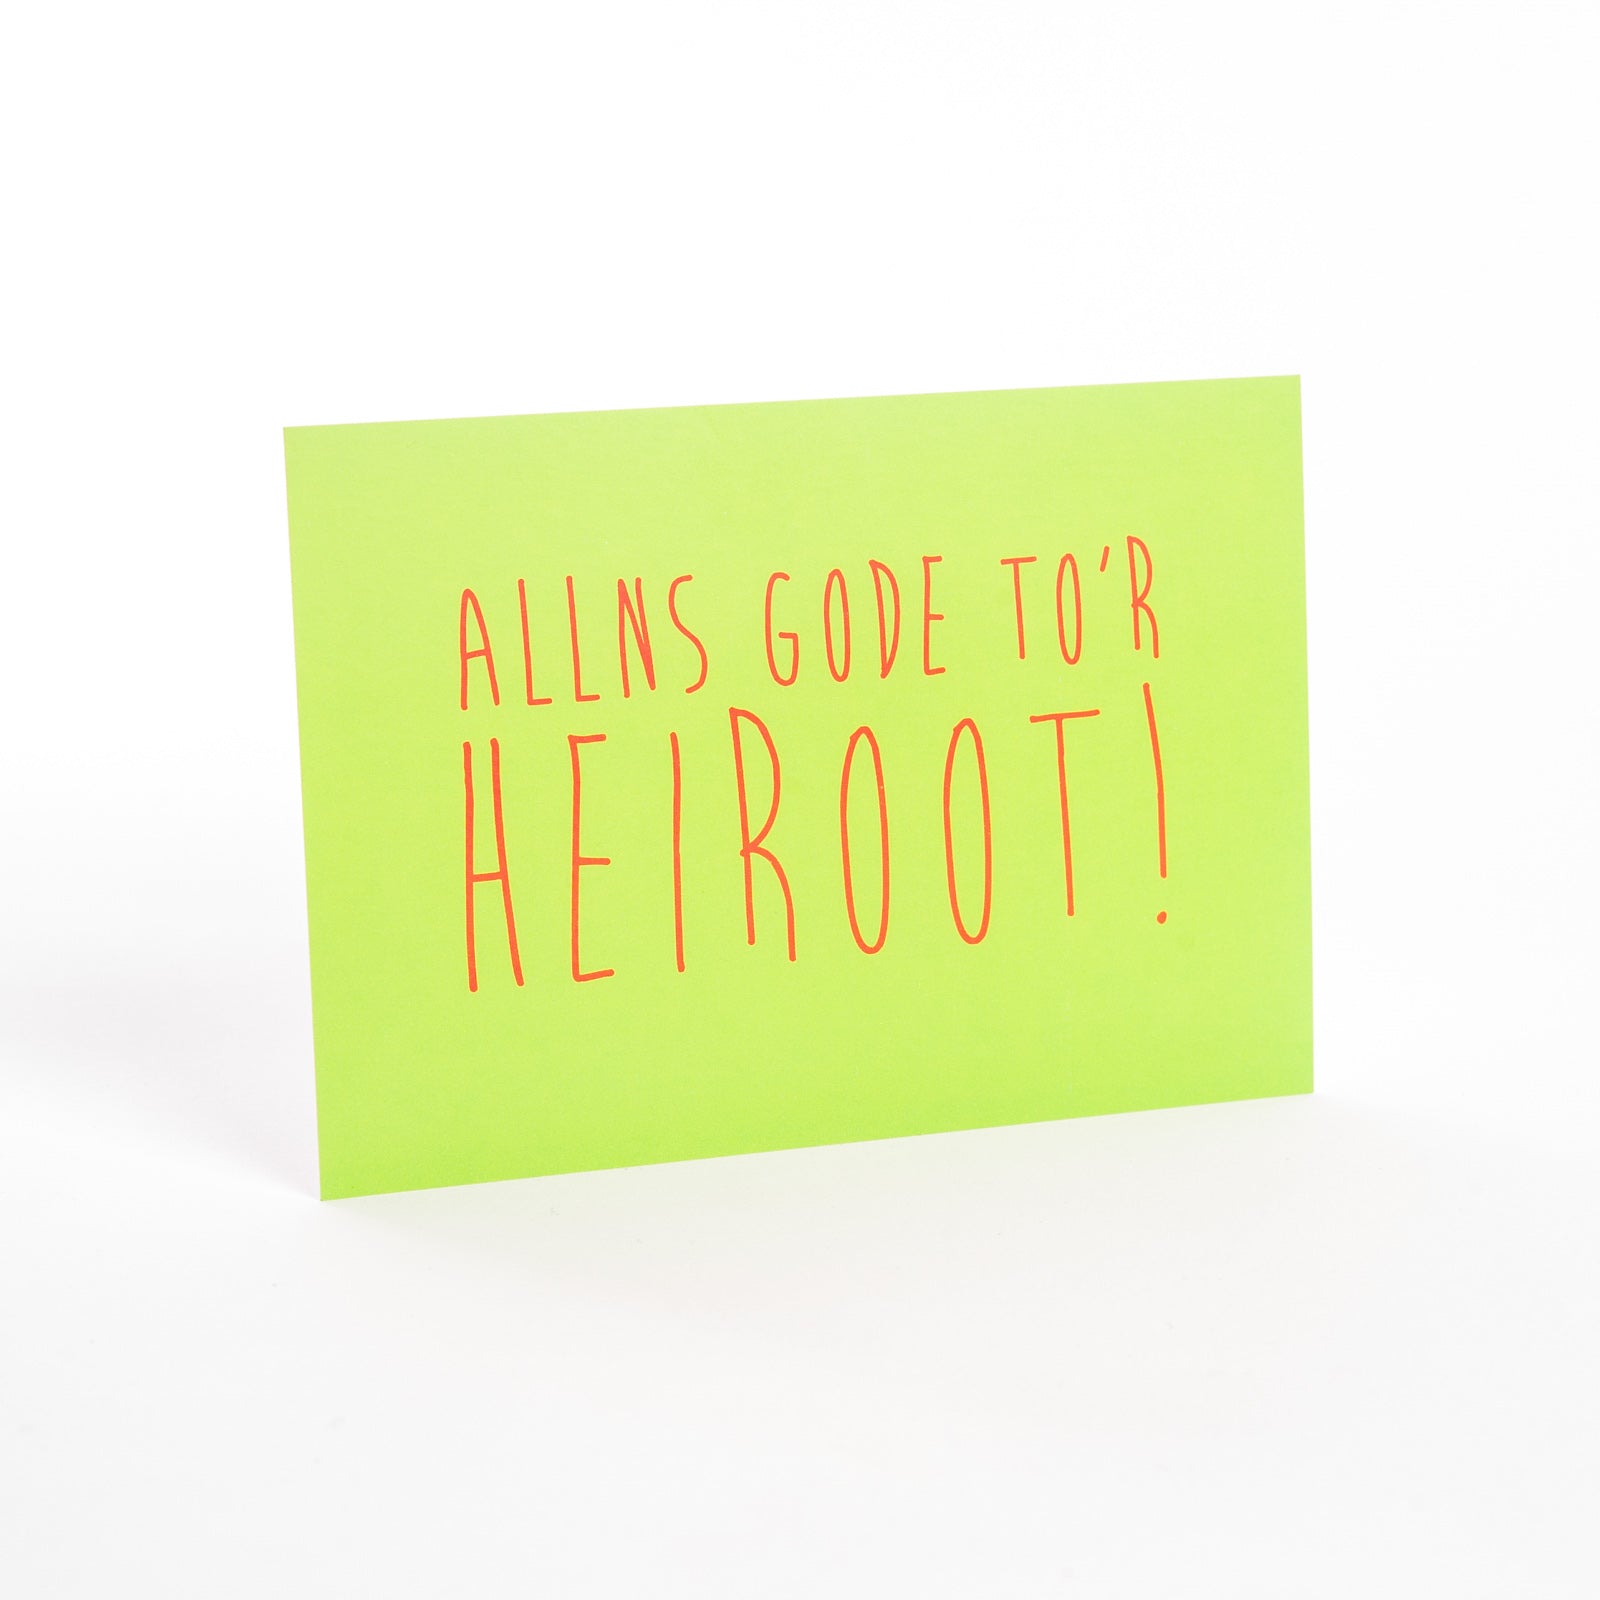 Postkarte "Allns Gode to´r Heiroot!" - KH